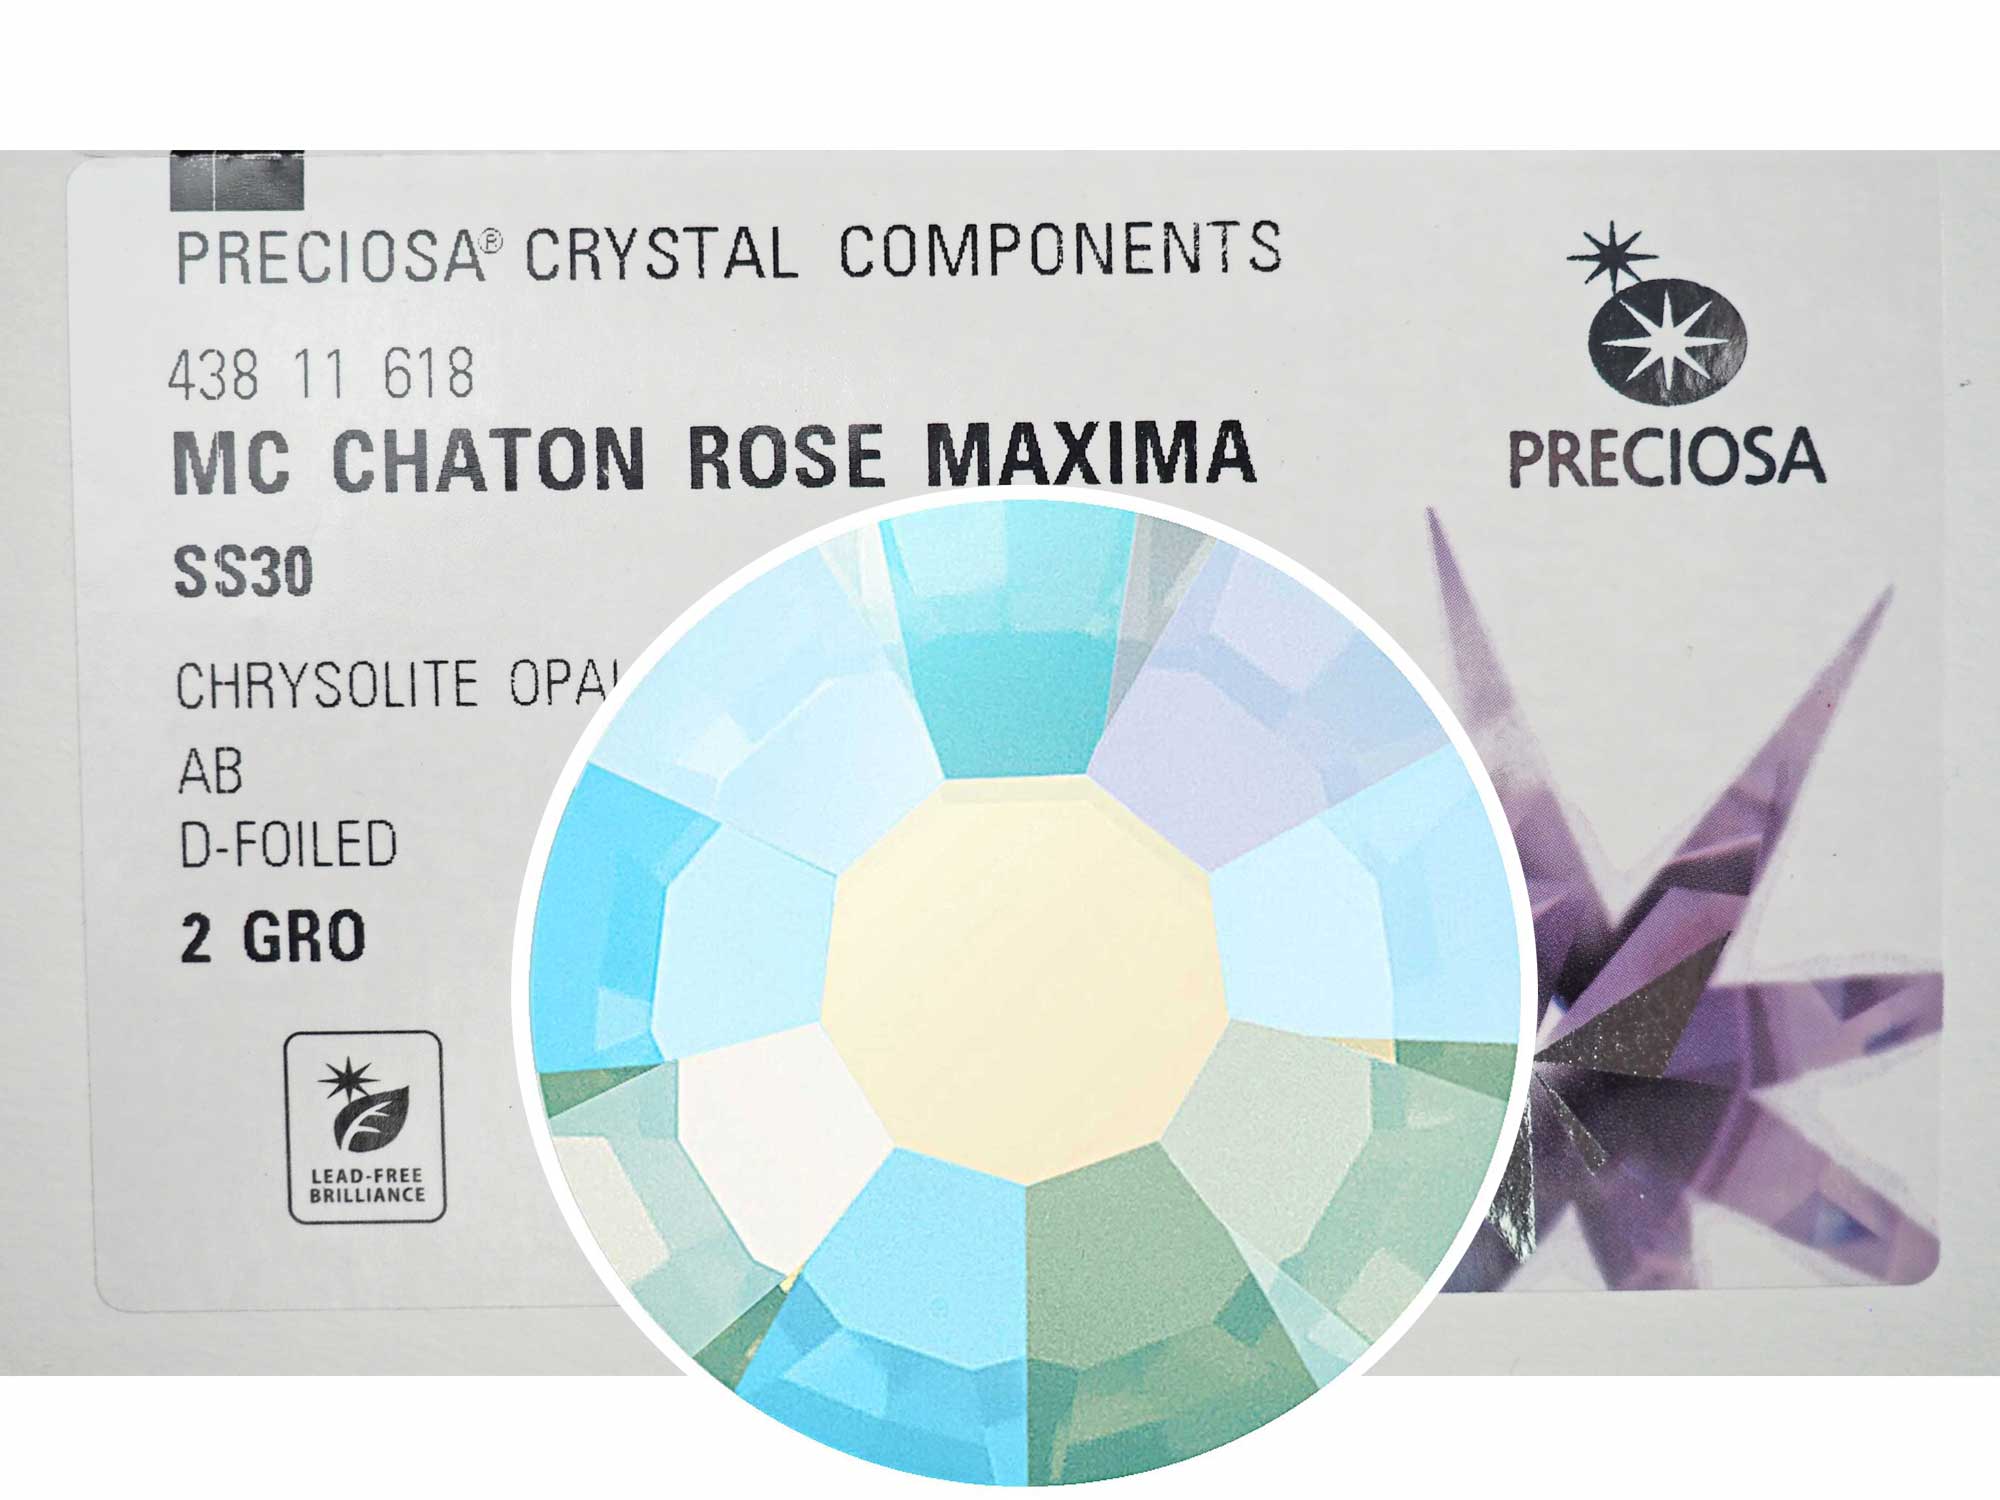 Chrysolite Opal AB coated milky, Preciosa VIVA or MAXIMA Chaton Roses (Rhinestone Flatbacks), Genuine Czech Crystals, light green translucent color with Aurora Borealis coating